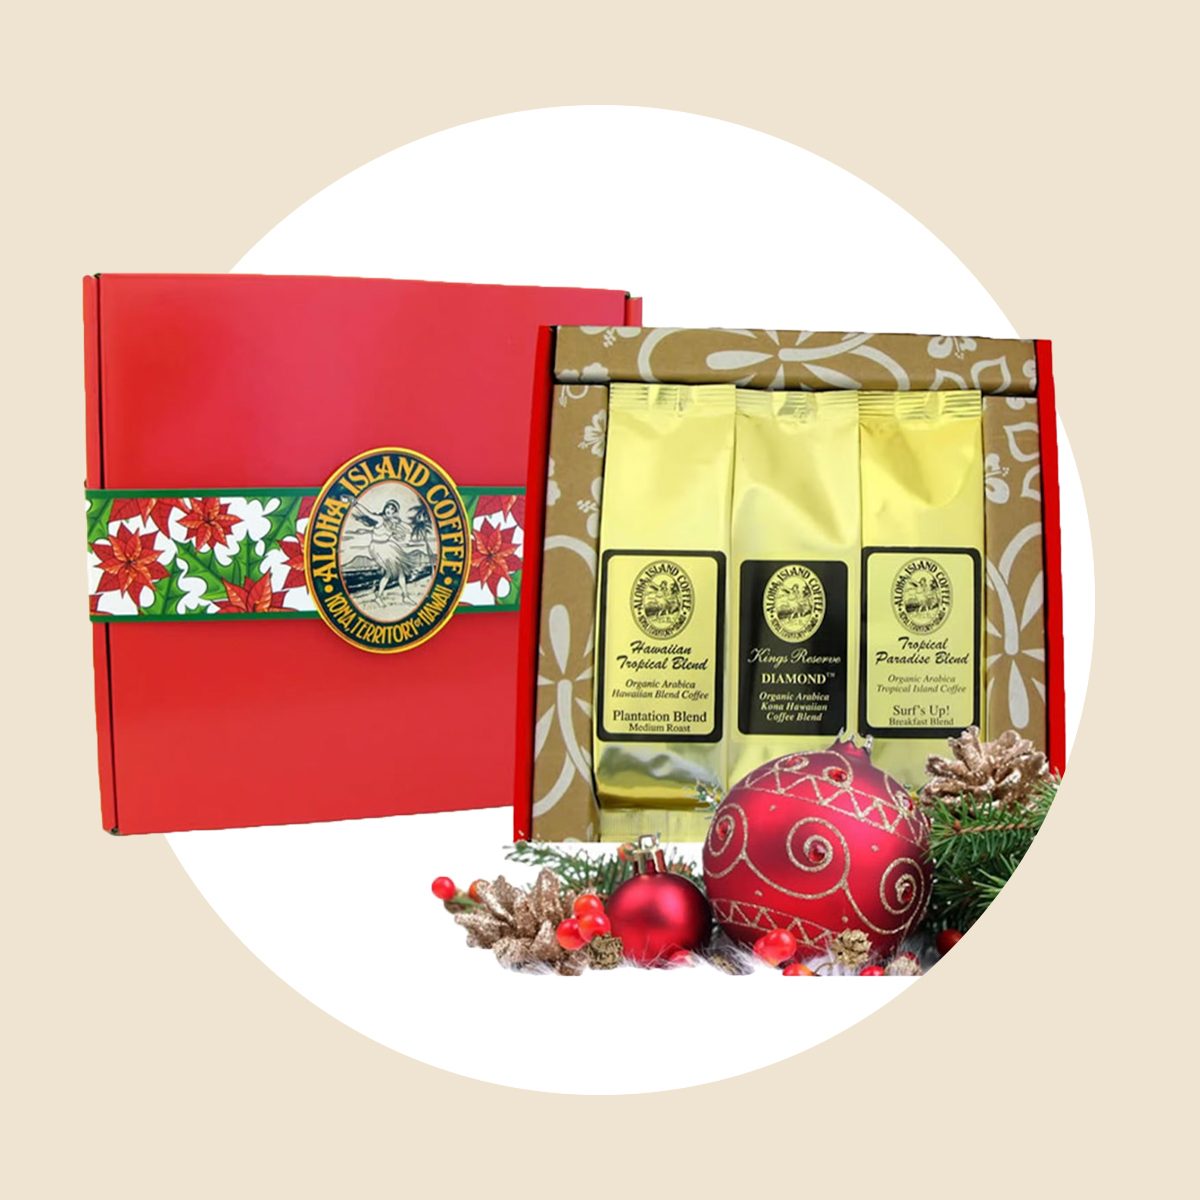 Kona Coffee Christmas Gift Ecomm Goldbelly.com